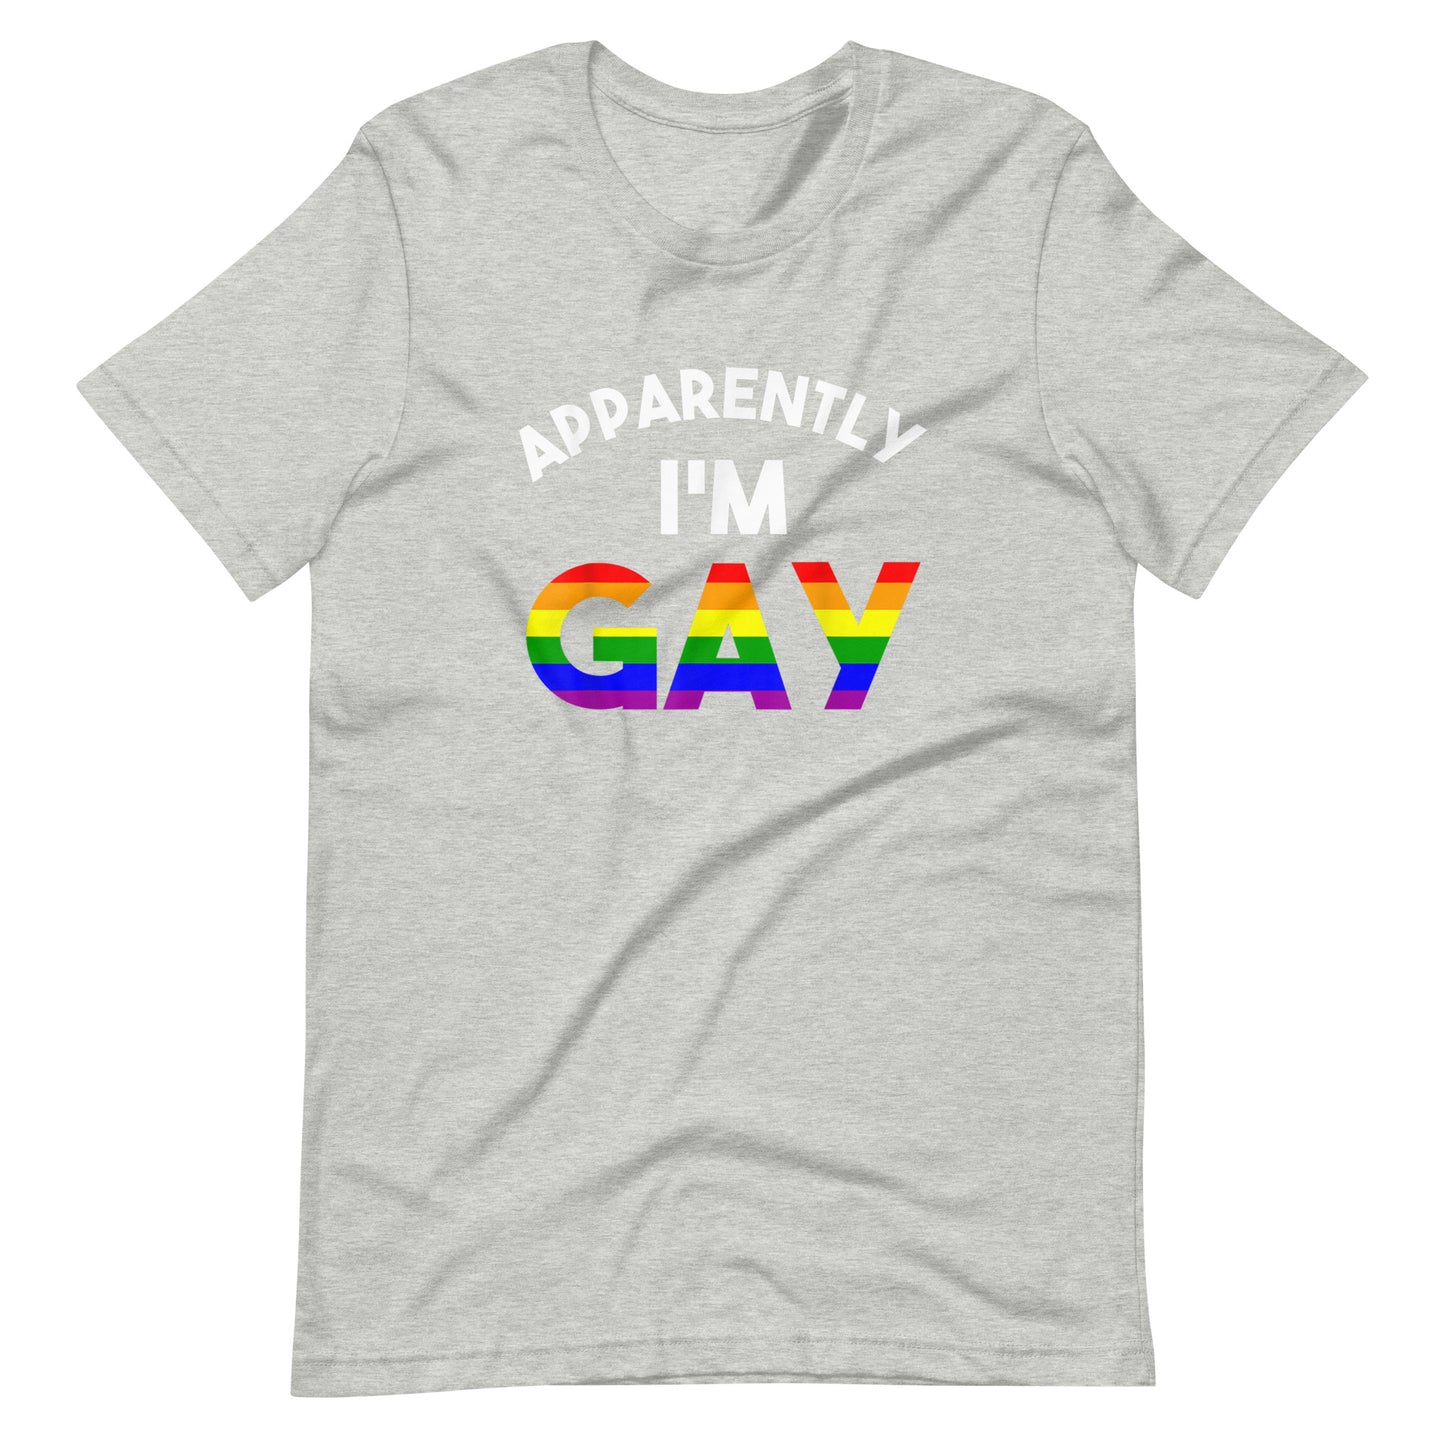 Apparently I'M Gay Pride Unisex T-Shirt - gay pride apparel